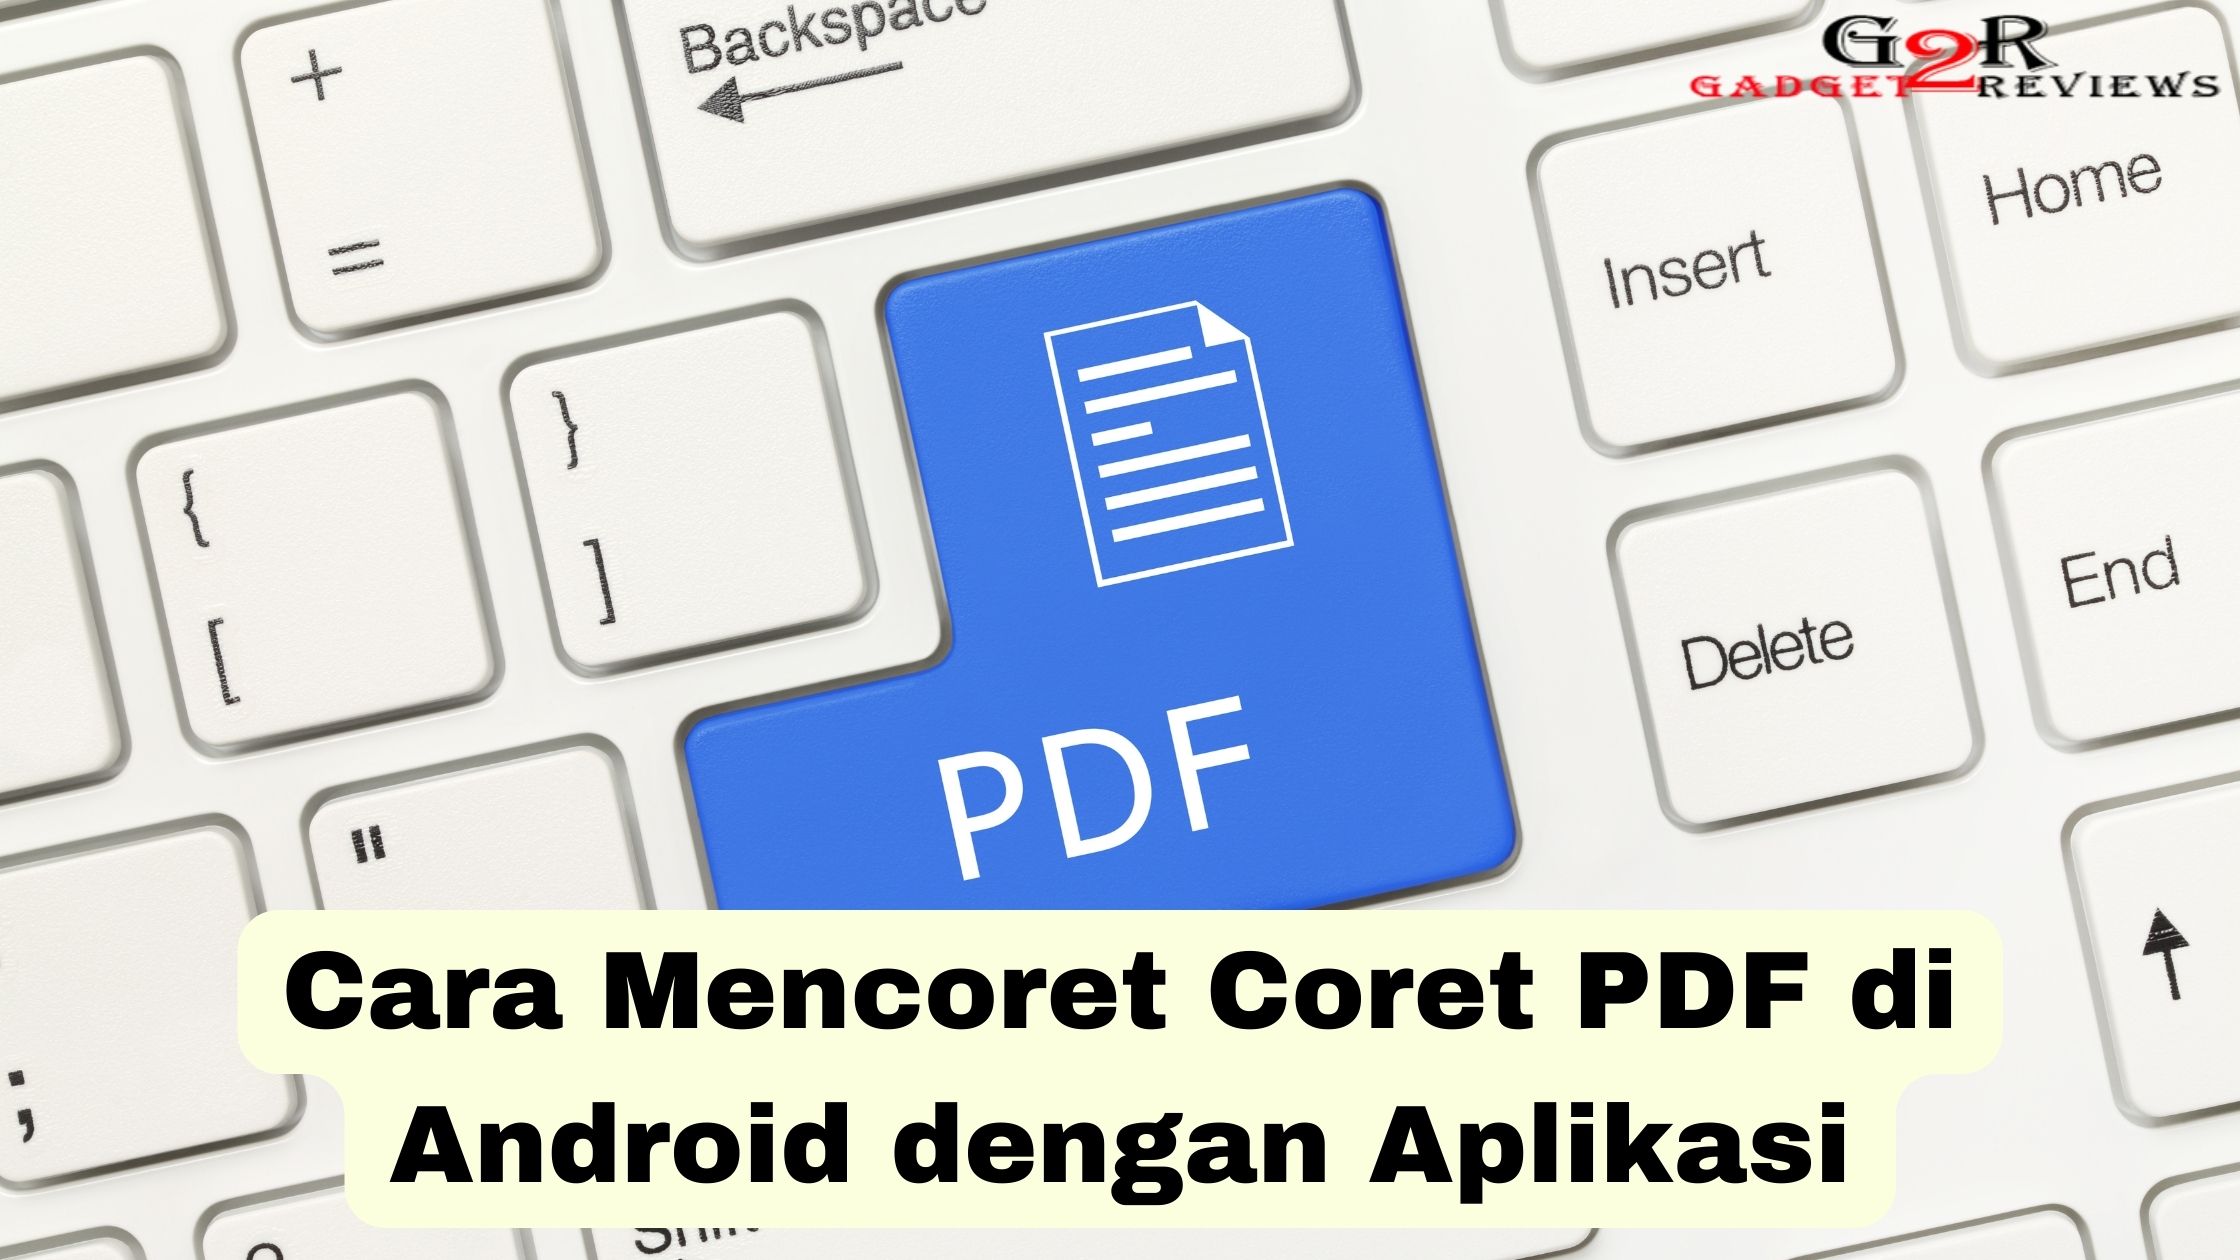 Cara Mencoret Coret PDF di Android